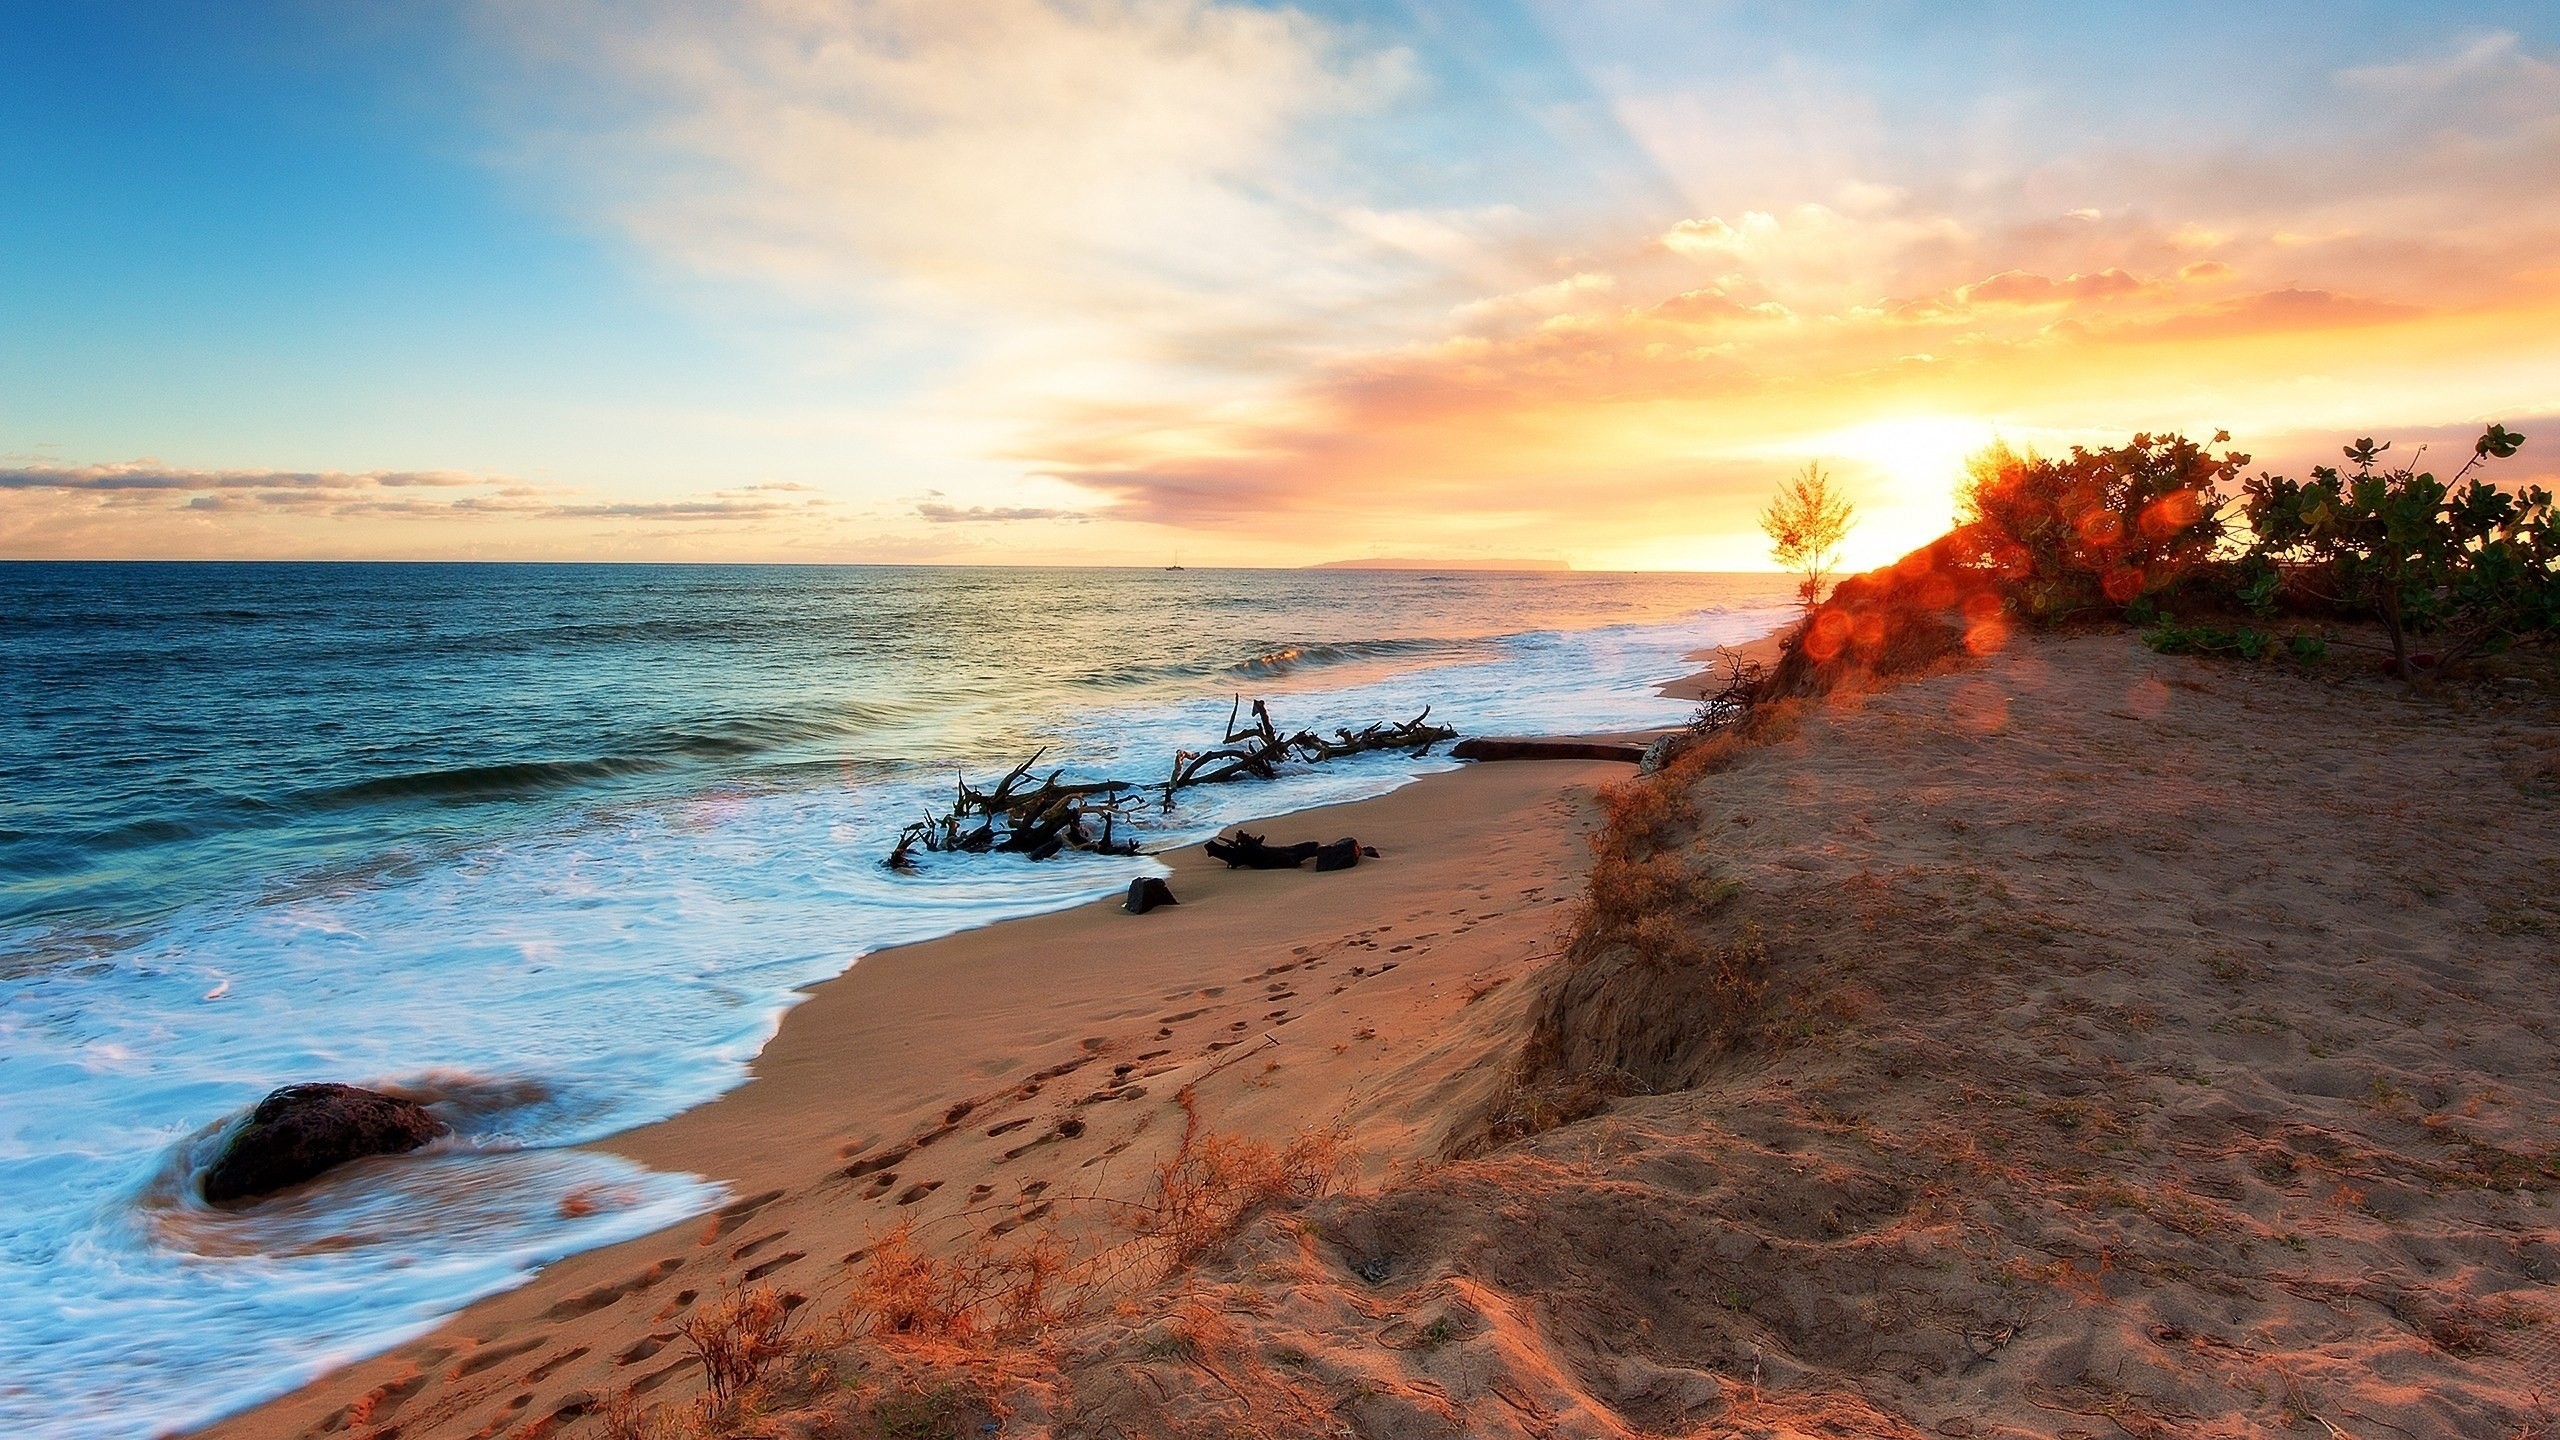 2560x1440 Explore Beach Sunrise, Beach Sunsets, and more! coastline images for desktop  ...